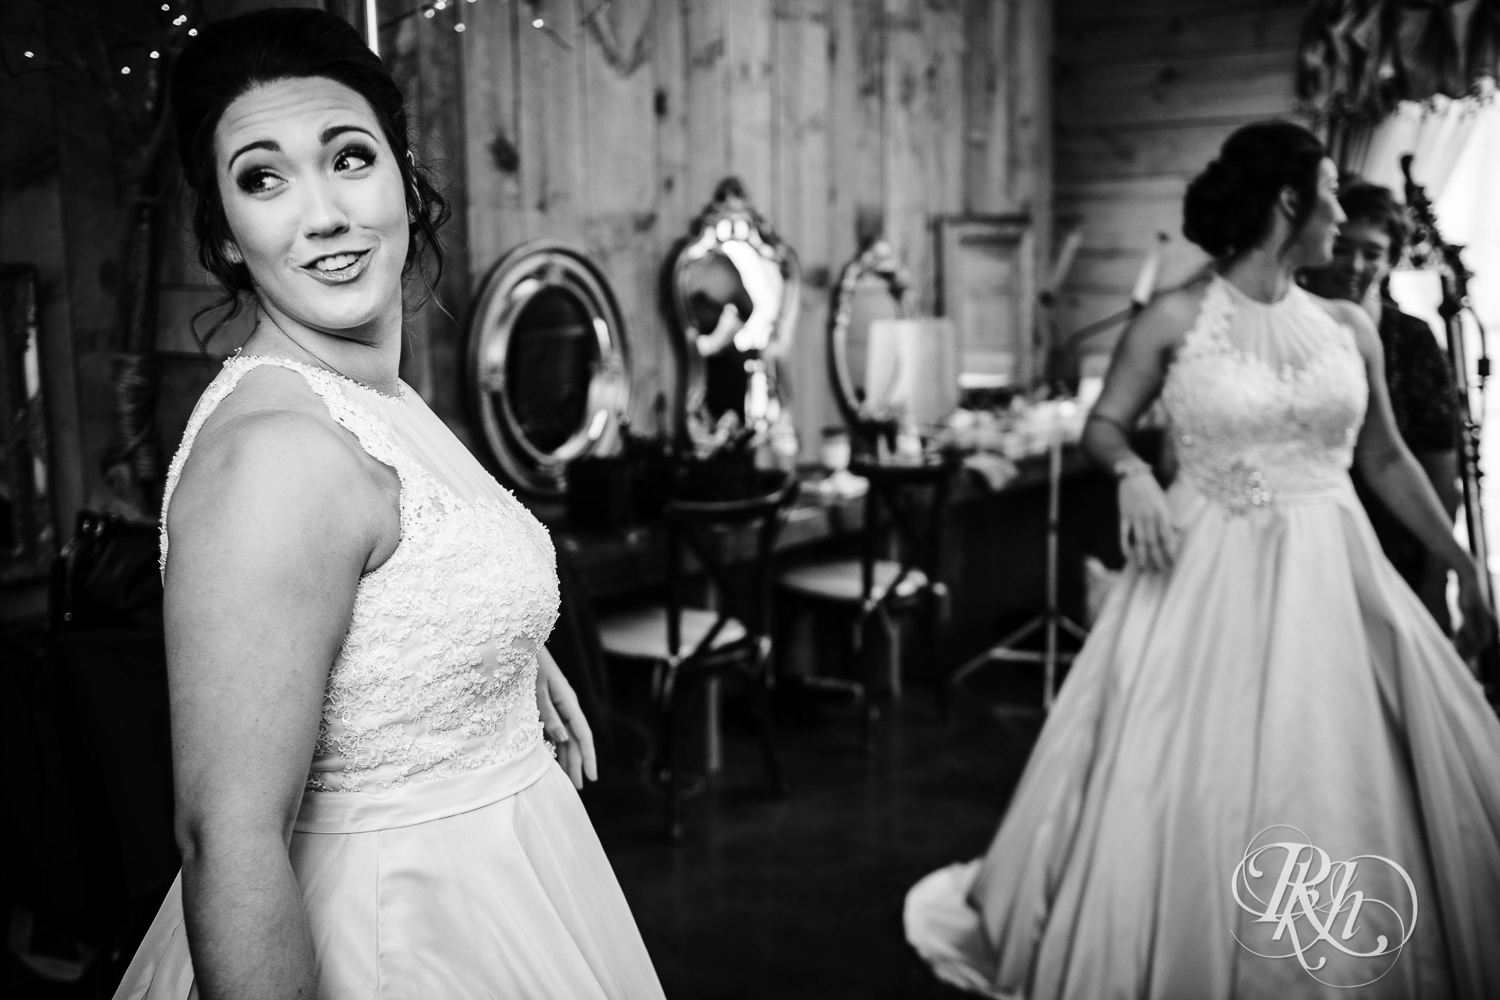 Bride gets into wedding dress before wedding at Creekside Farm in Rush City, Minnesota.